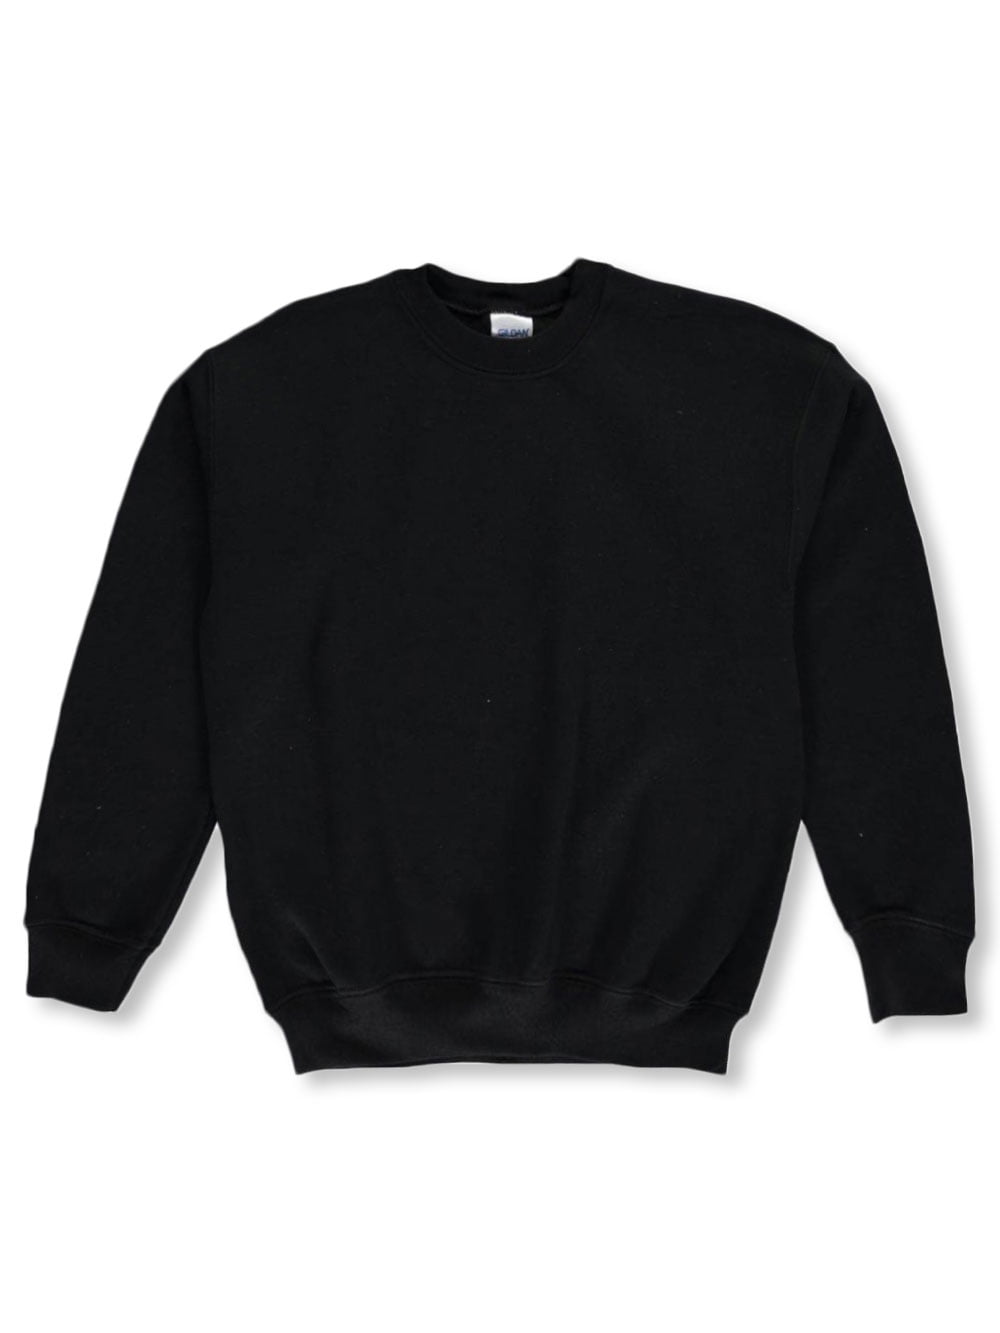 Gildan Unisex Youth Crewneck Sweatshirt (Sizes 4 - 20) - burgundy, m/10-12  (Big Girls) 